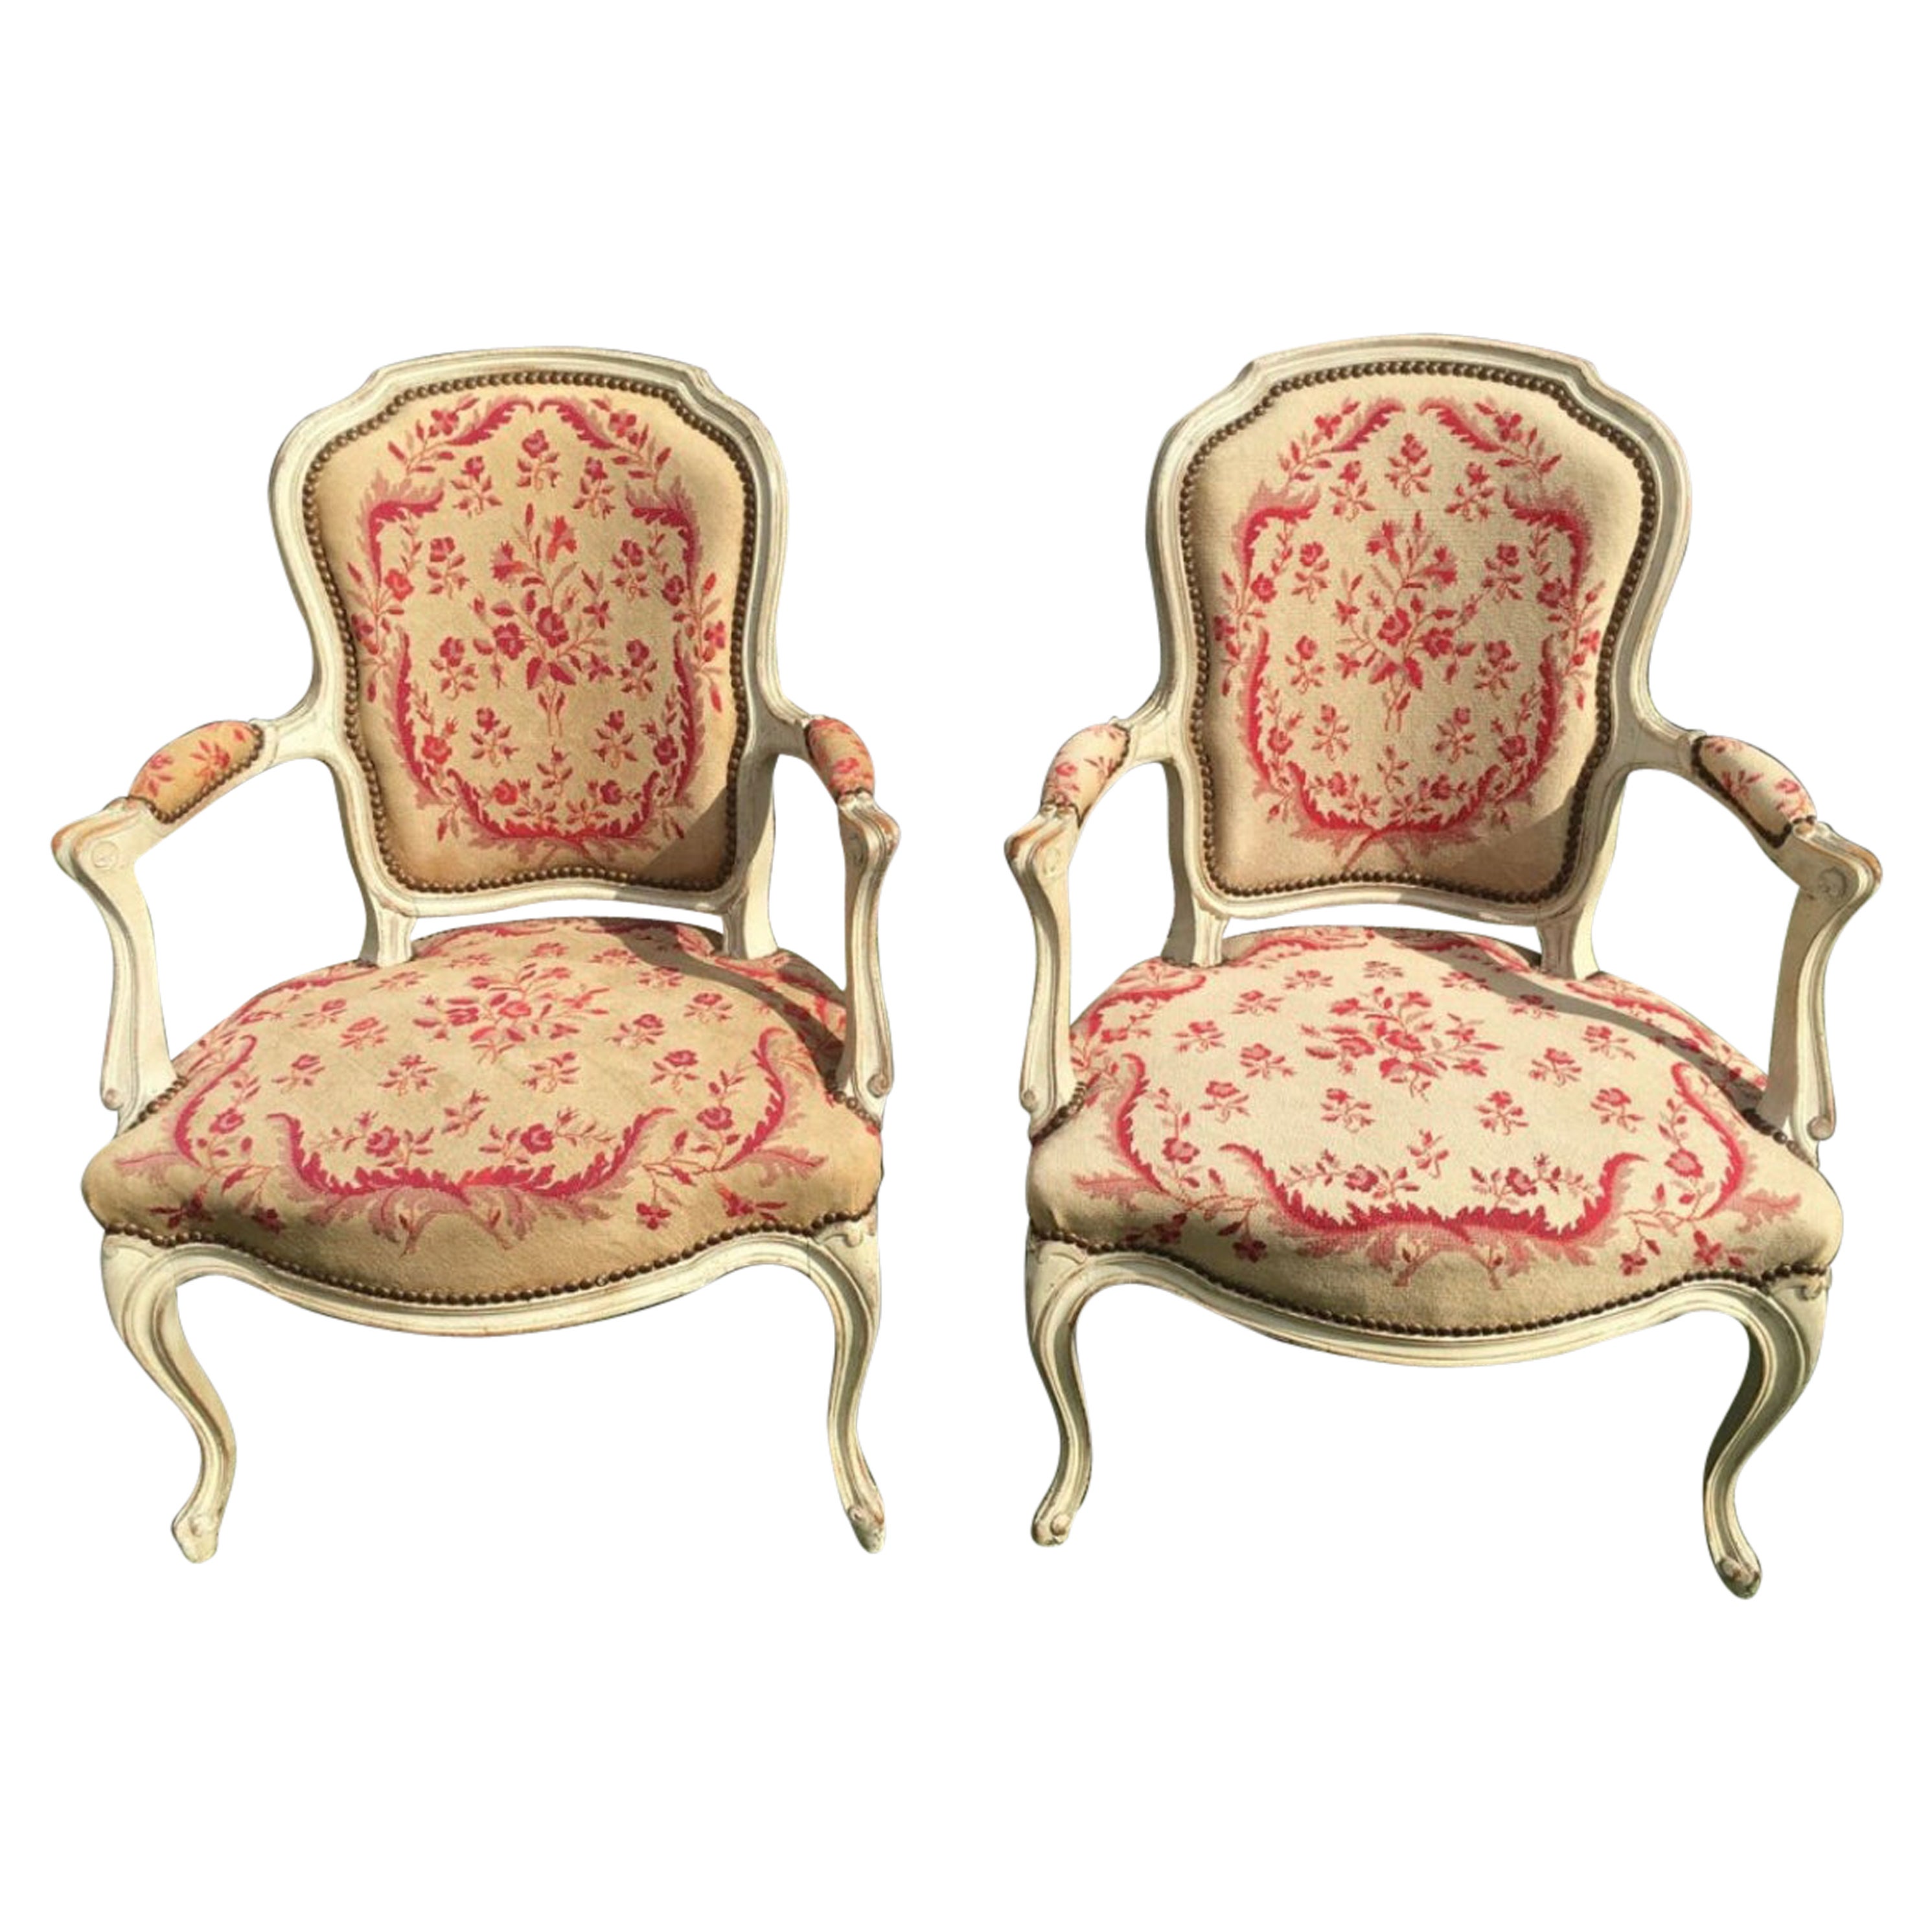 Ein Paar lackierte Sessel aus dem 18. Jahrhundert, Louis XV.-Periode